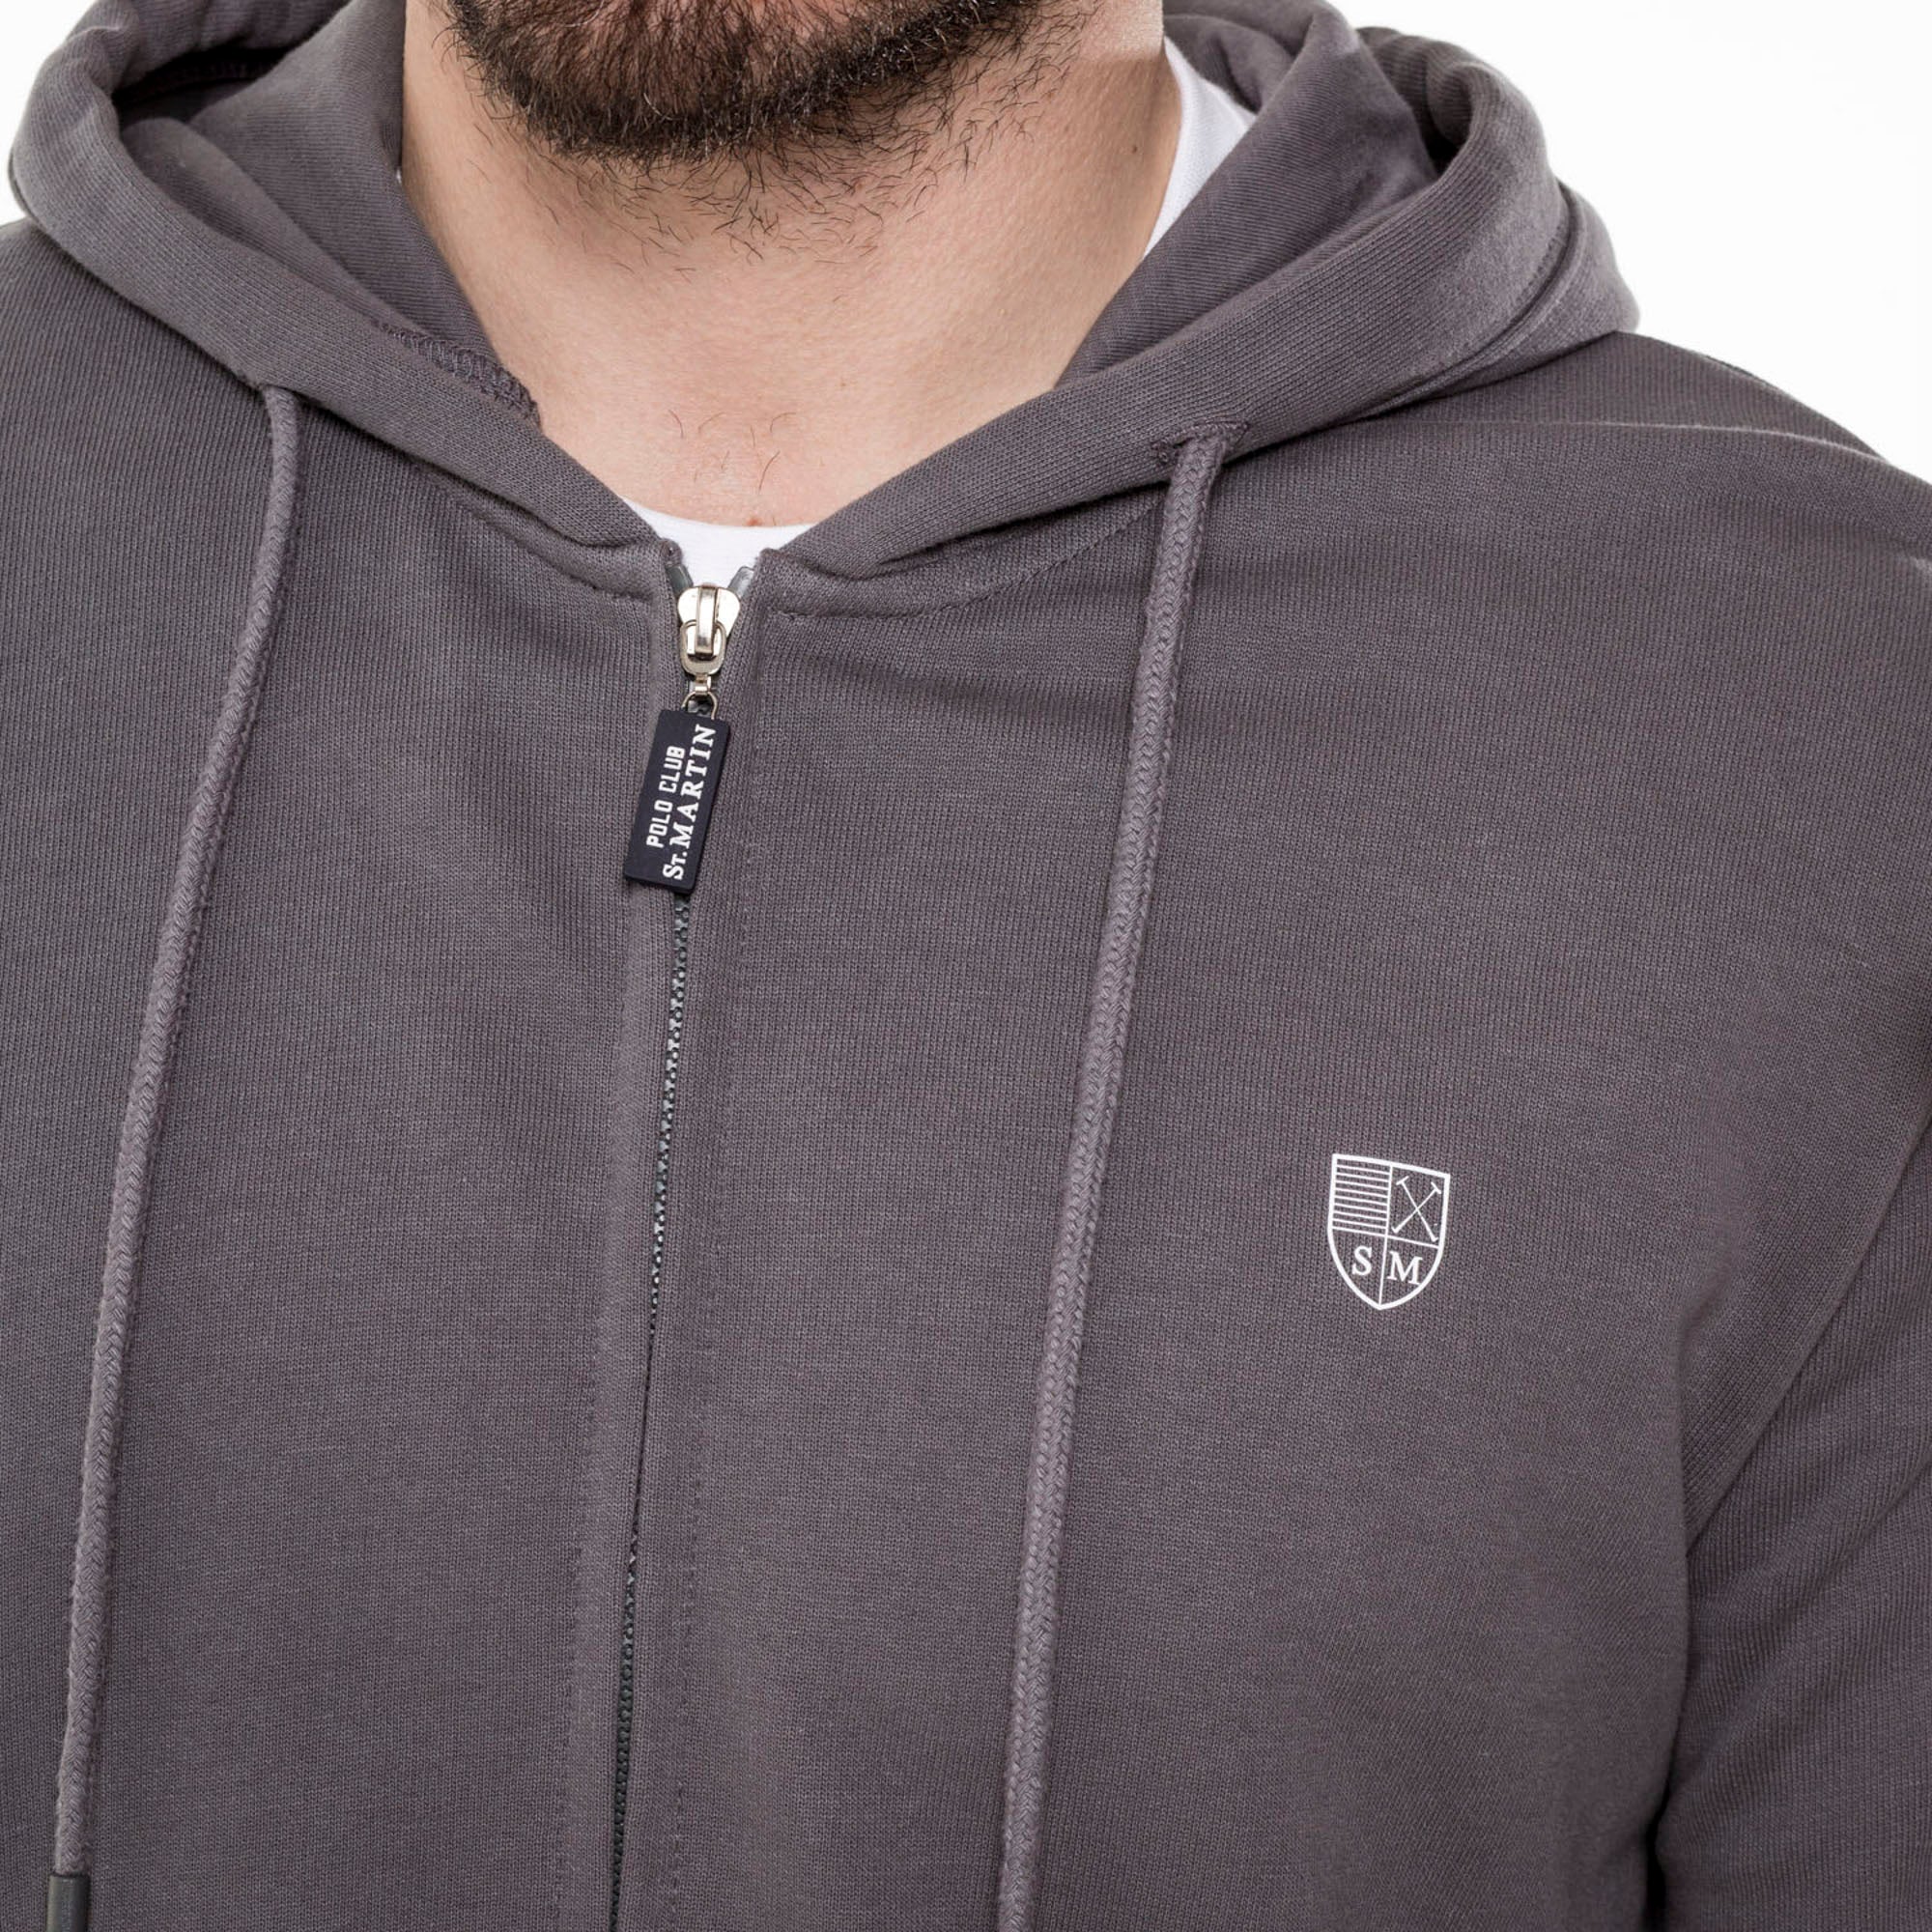 Full zipper sweatshirt with hood and logo print